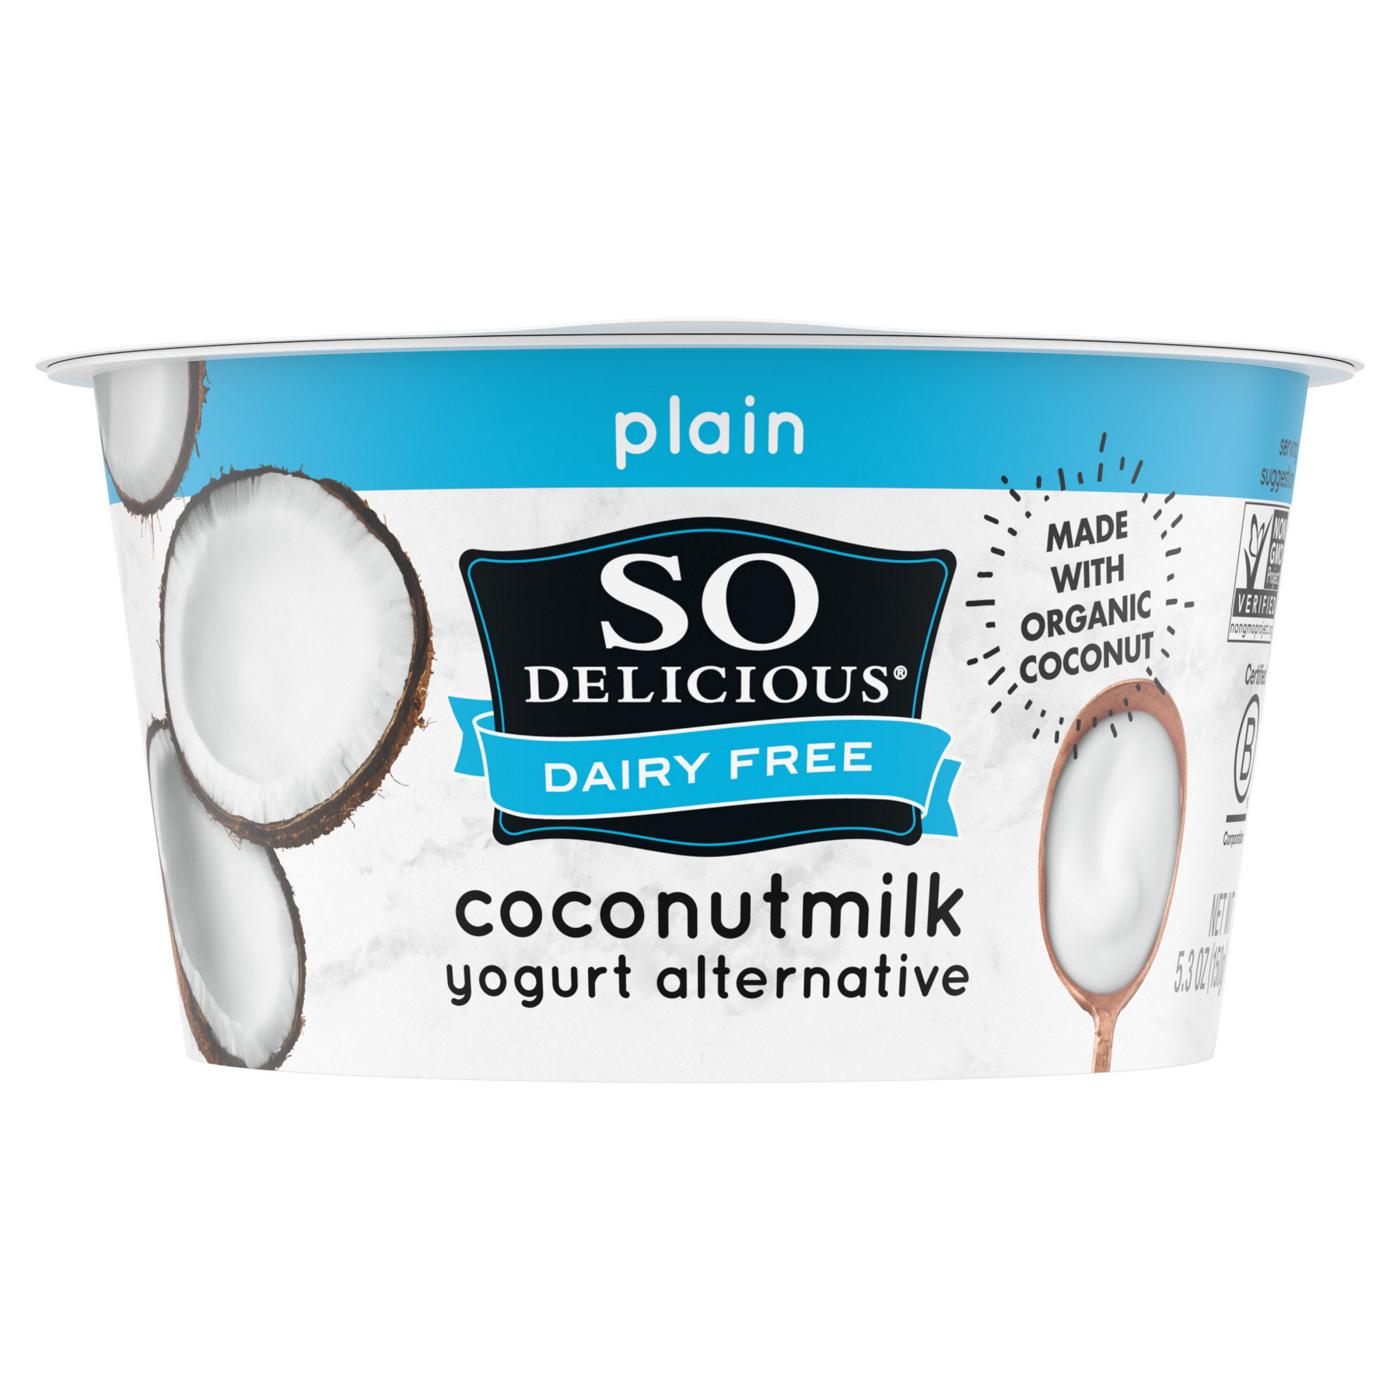 So Delicious Dairy Free Plain Coconutmilk Yogurt; image 2 of 9